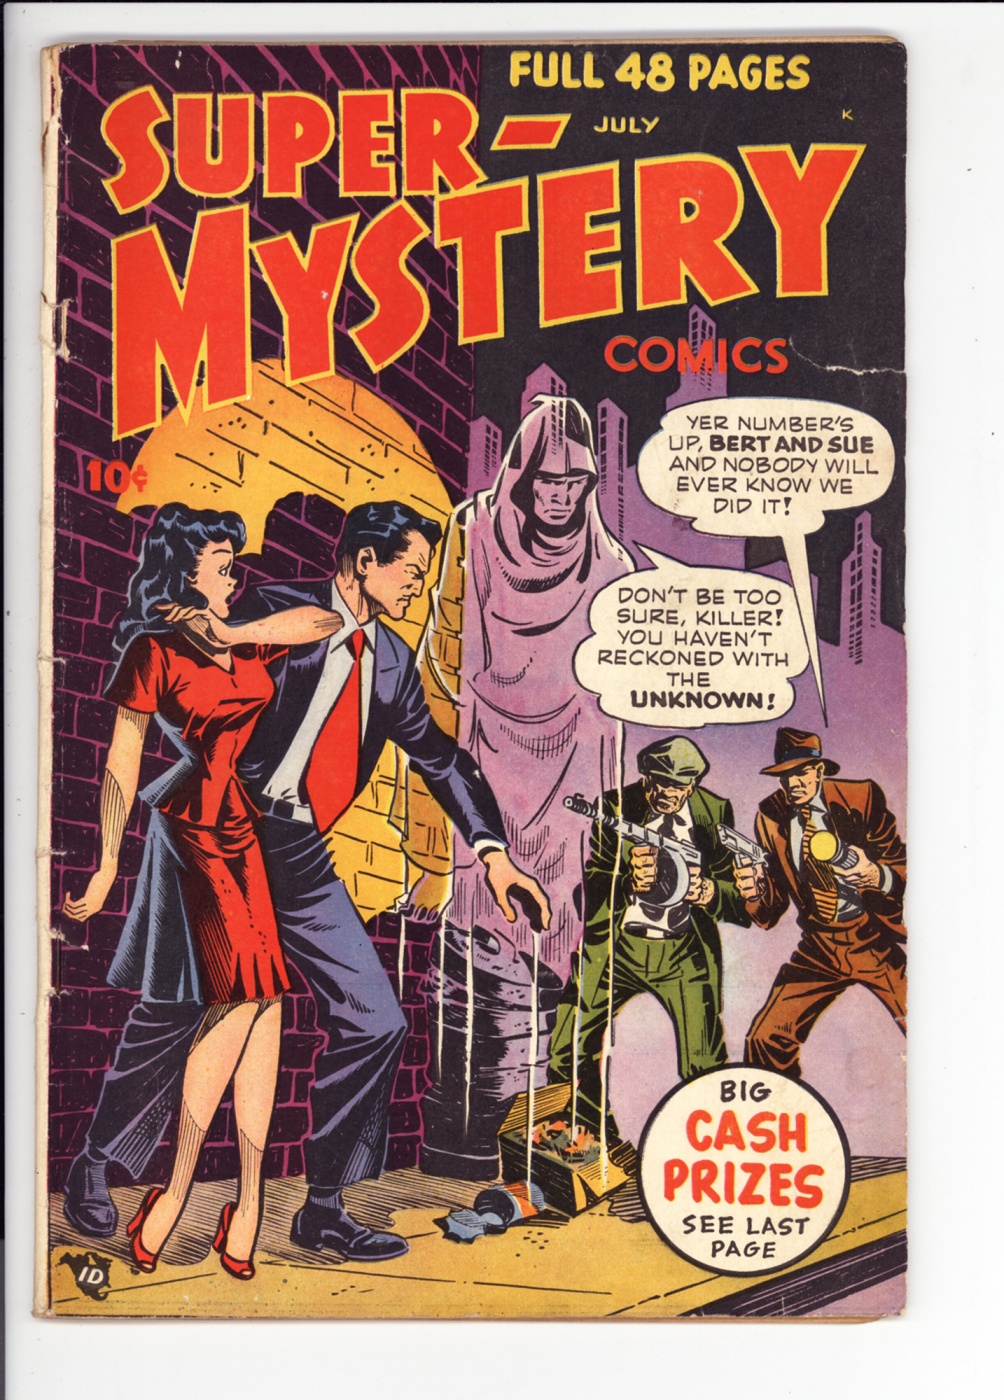 Mystery comics